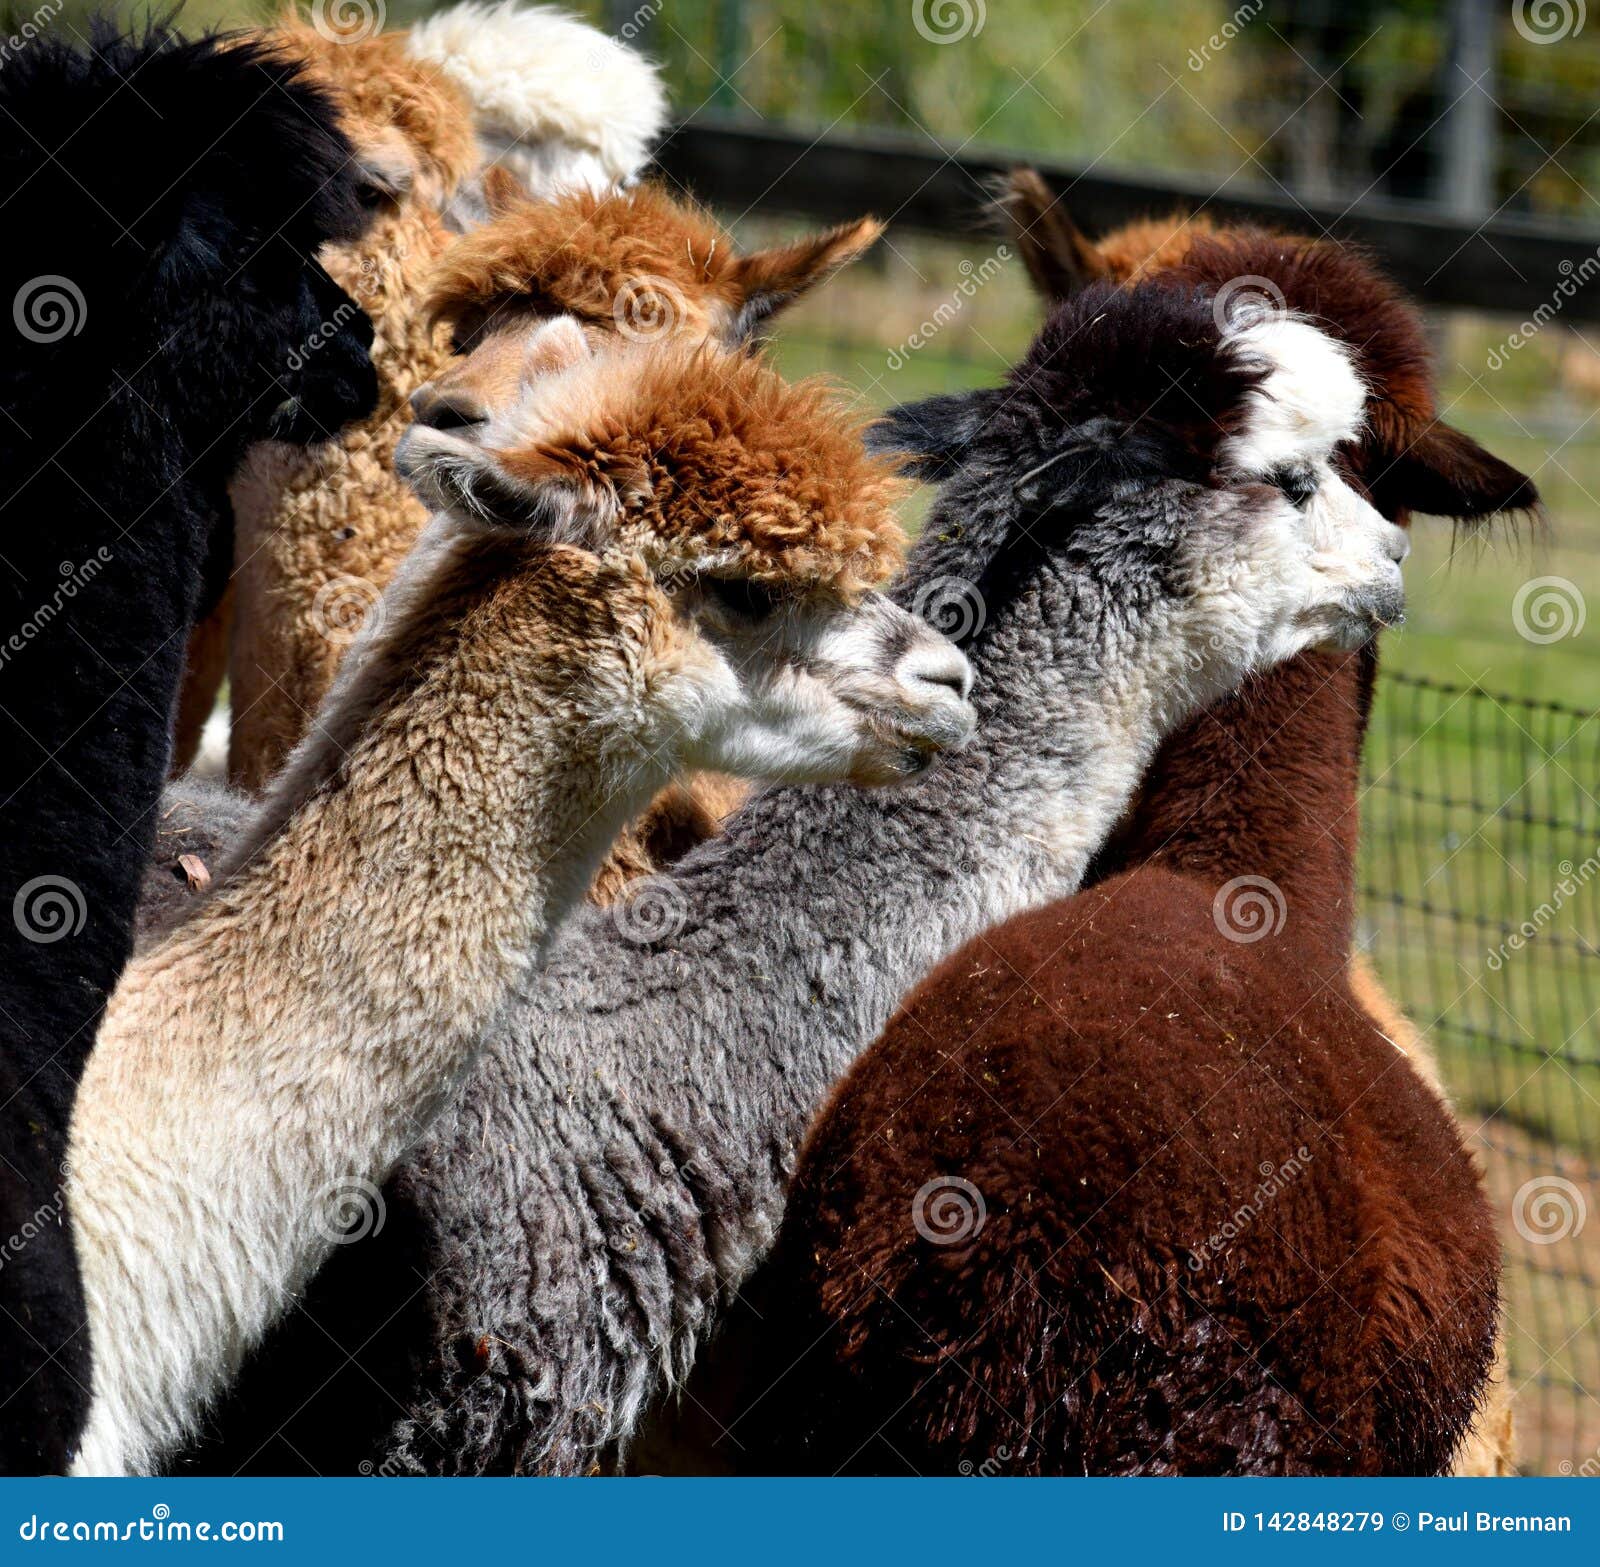 Cute Alpacas At Farm Stock Image Image Of Animal Nature